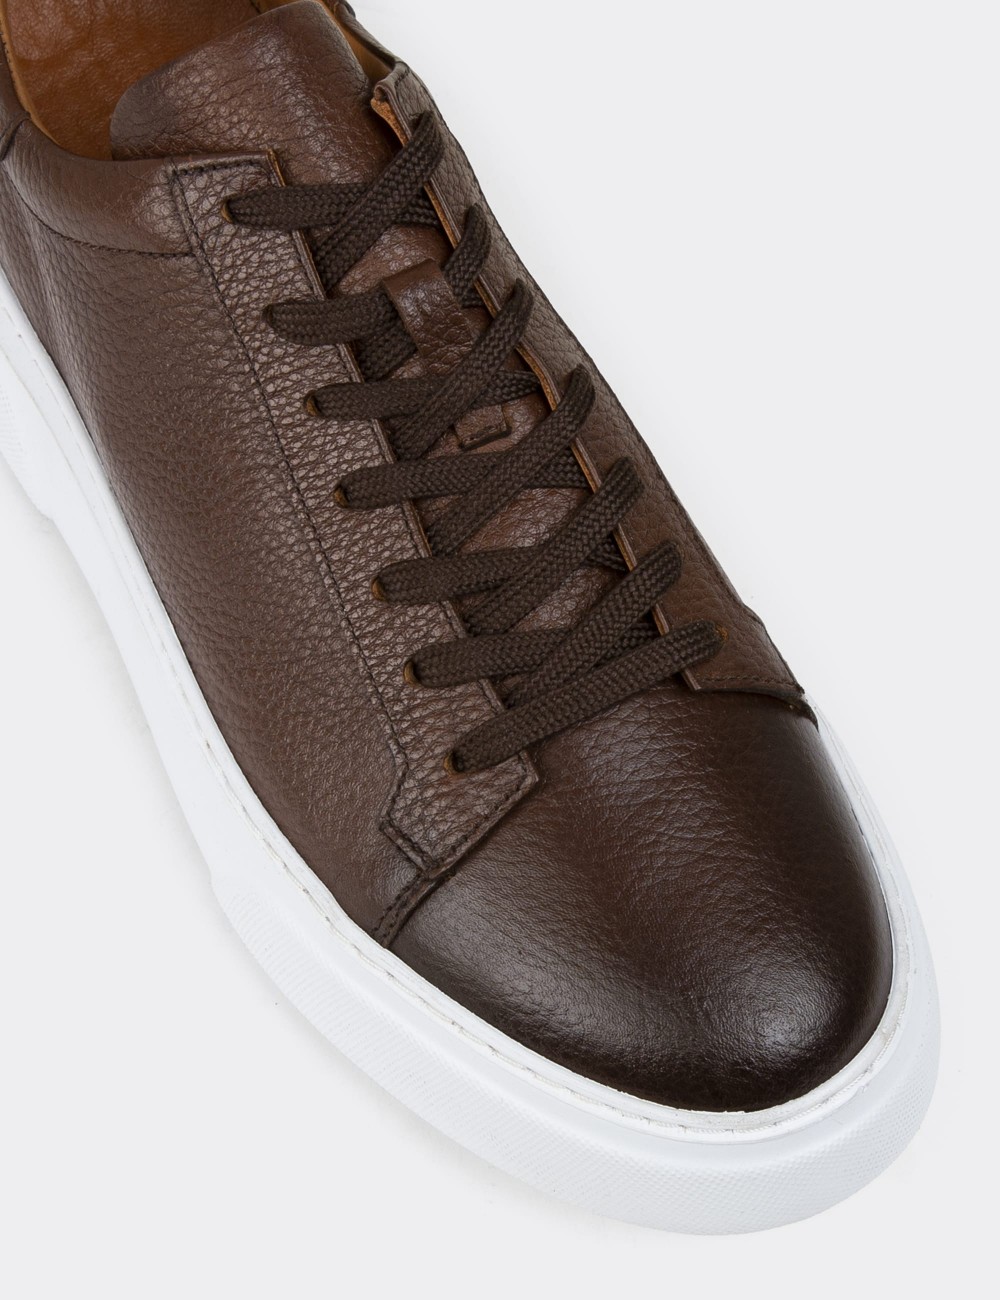 Tan Leather Sneakers - M2501MTBAP01